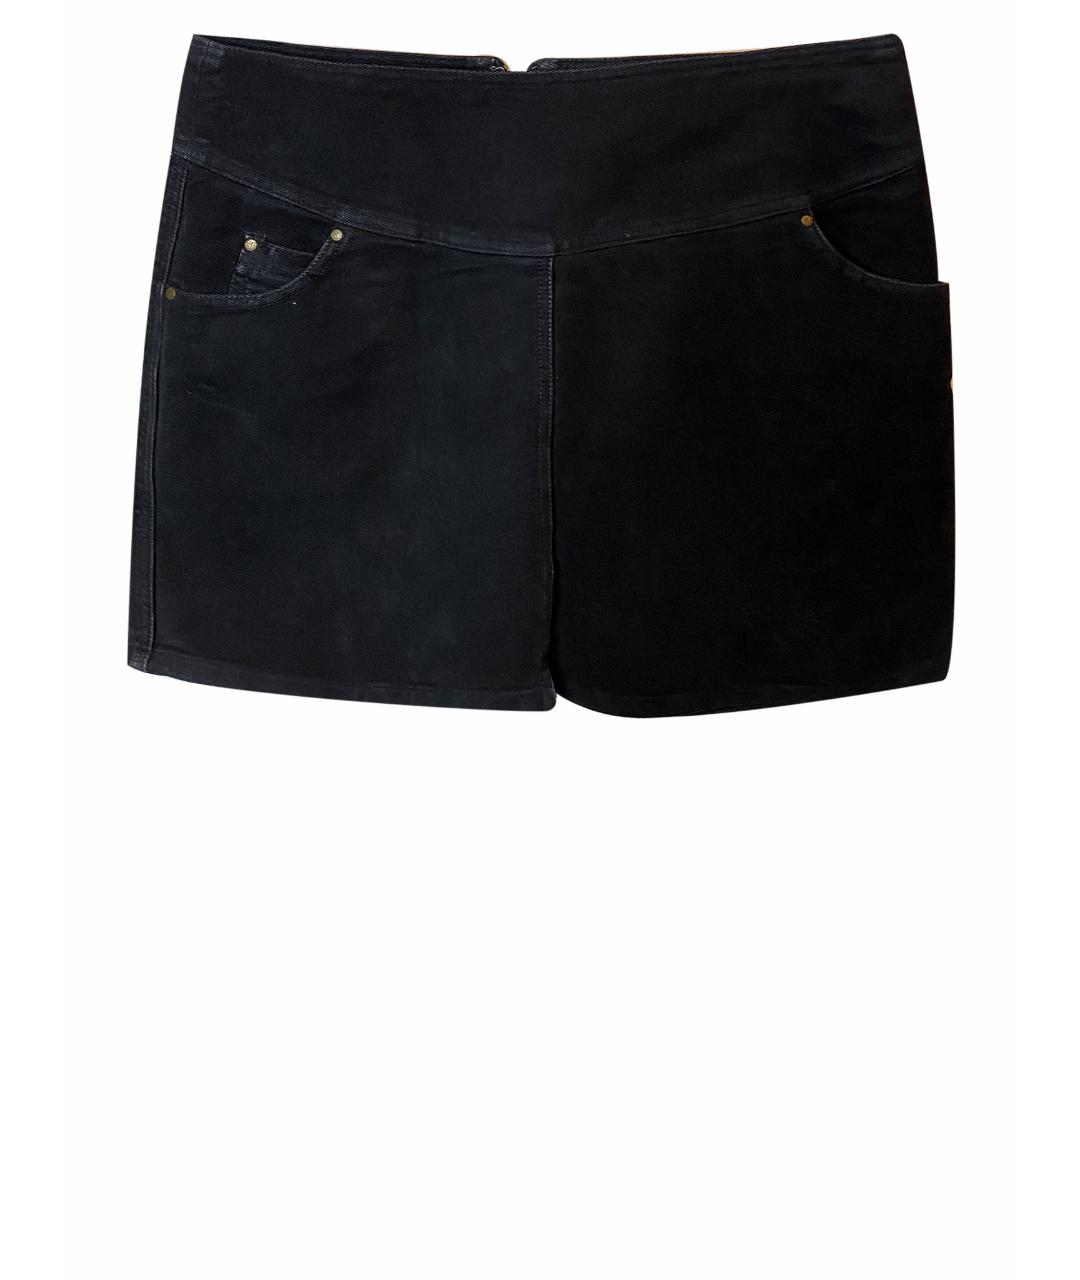 GIANFRANCO FERRE VINTAGE Черная бархатная юбка мини, фото 1